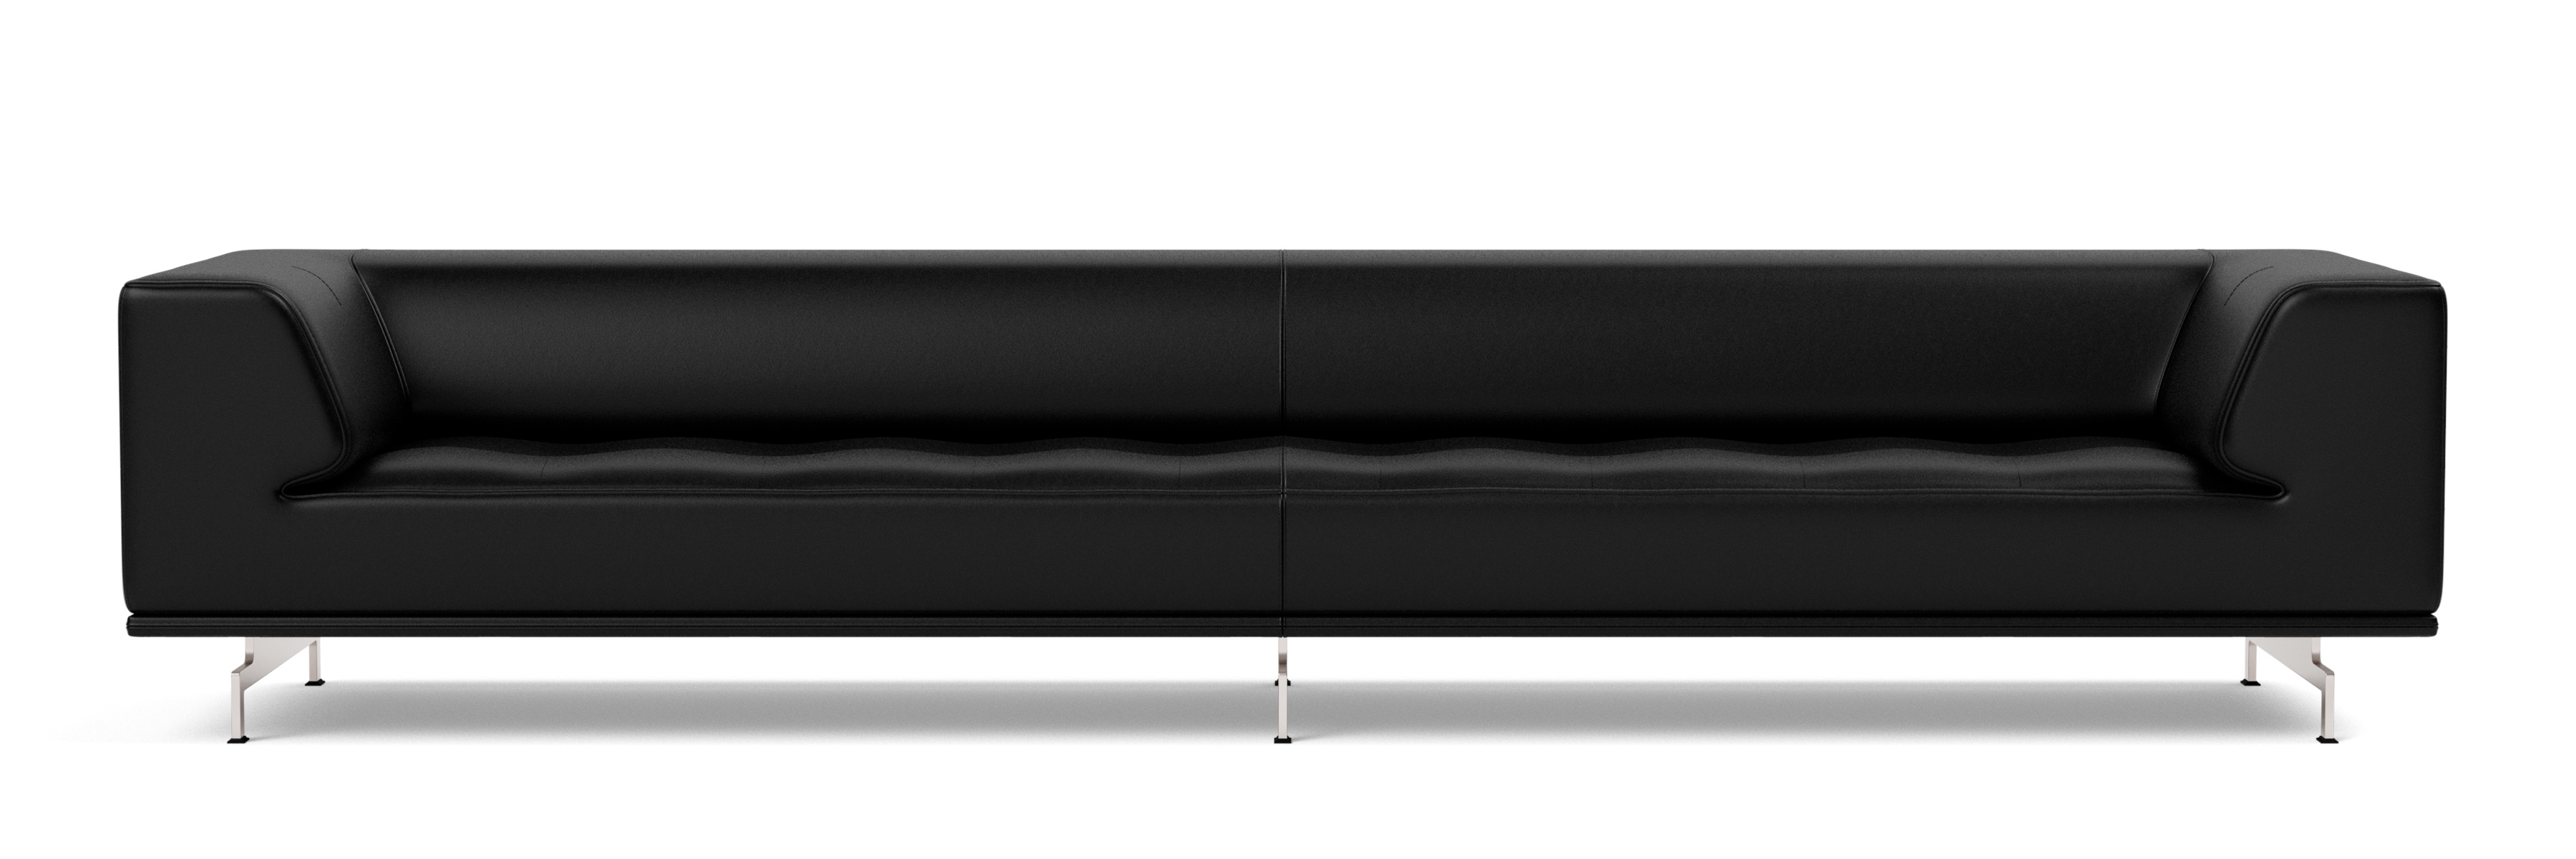 Delphi Sofa - Model 4512, brushed aluminium / leder cera 905 russet brown